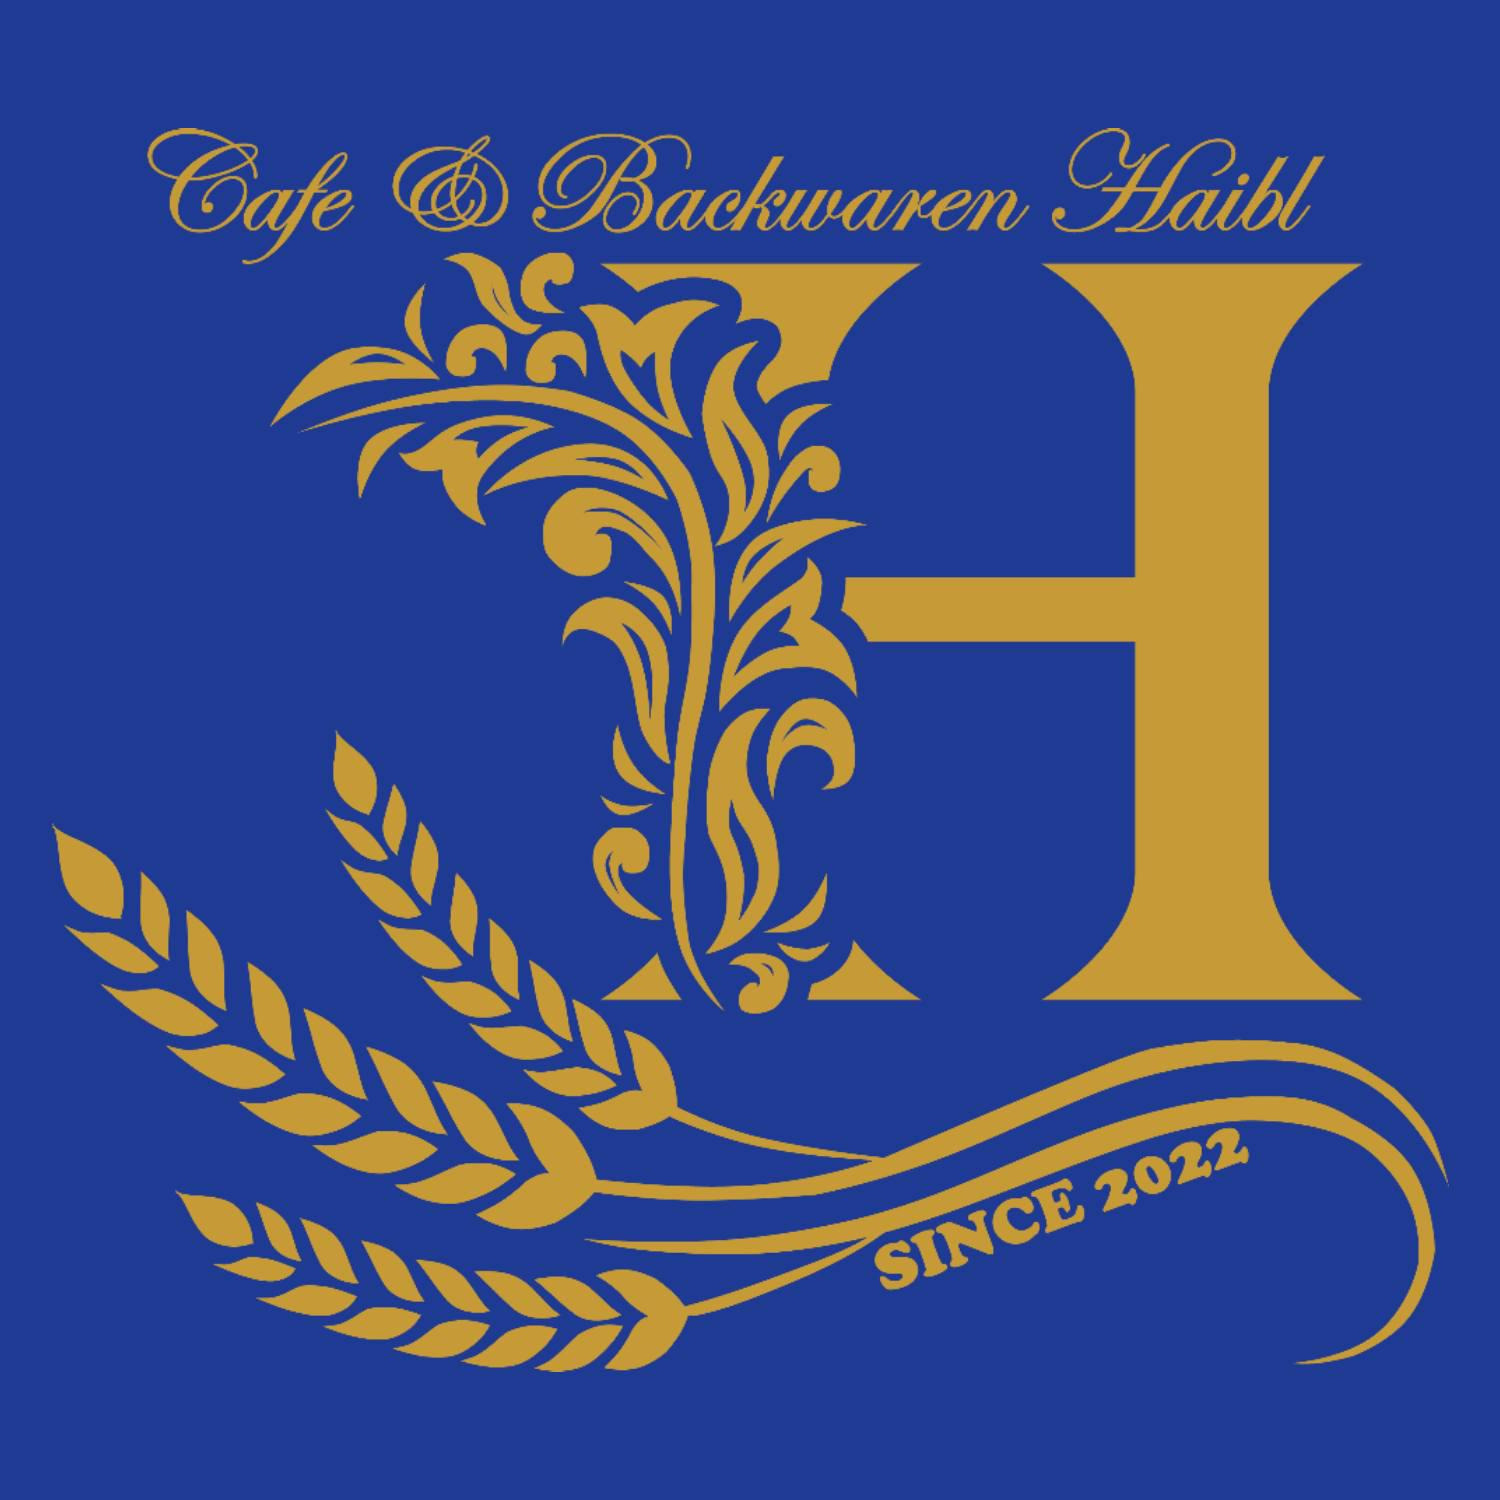 Cafe & Backwaren Haibl - Karin Haibl Logo